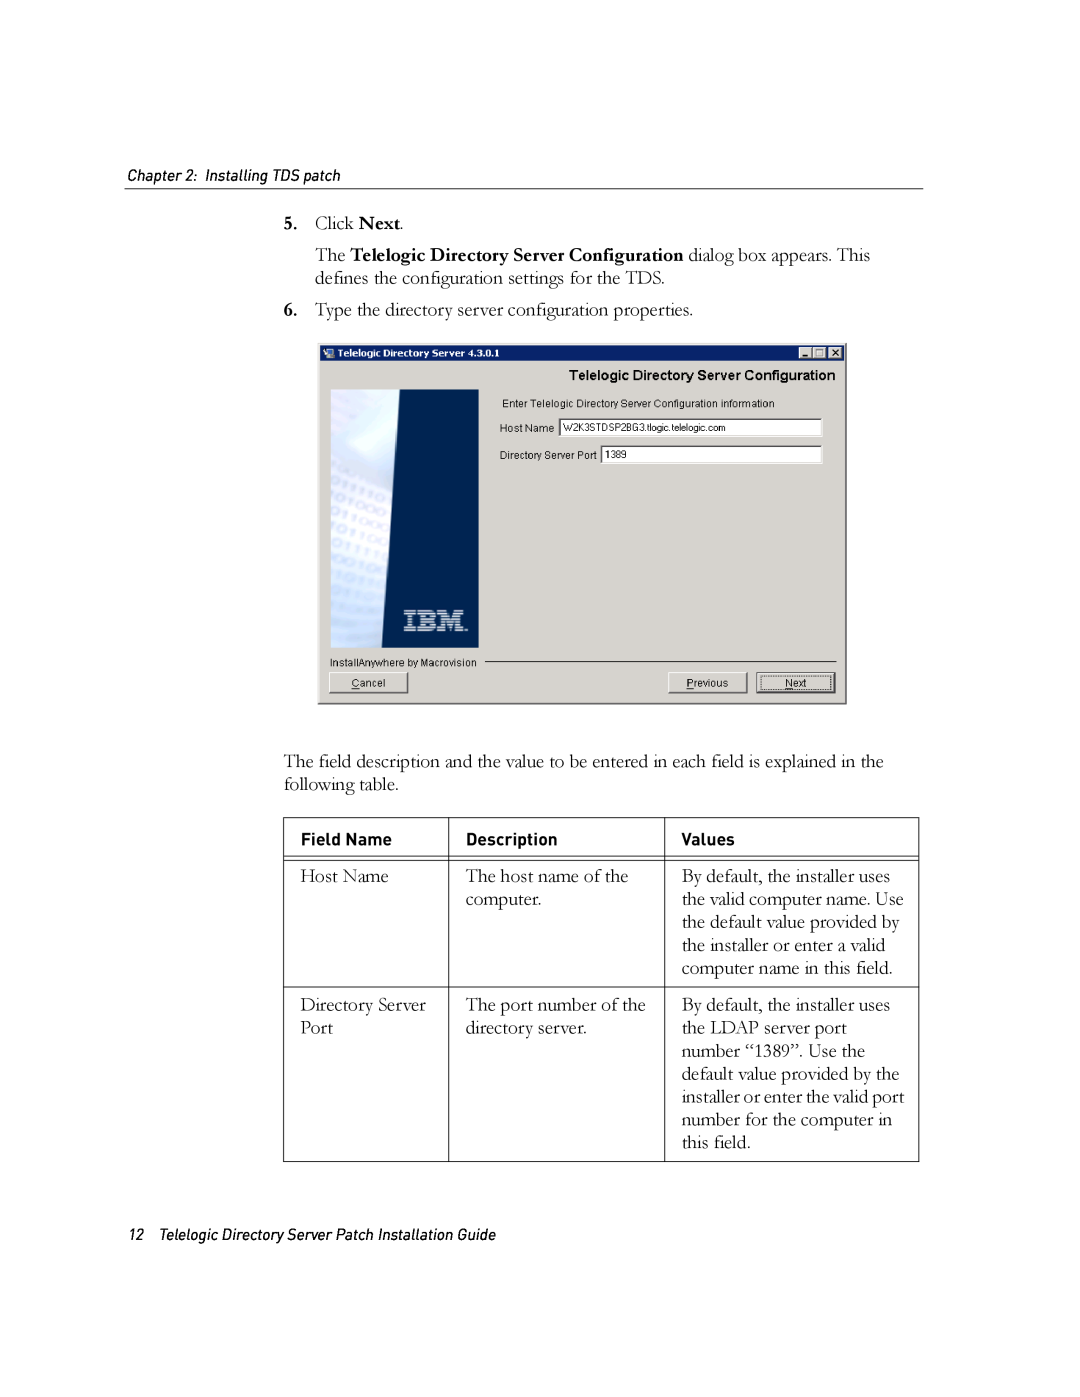 IBM Telelogic Directory Server manual Click Next 